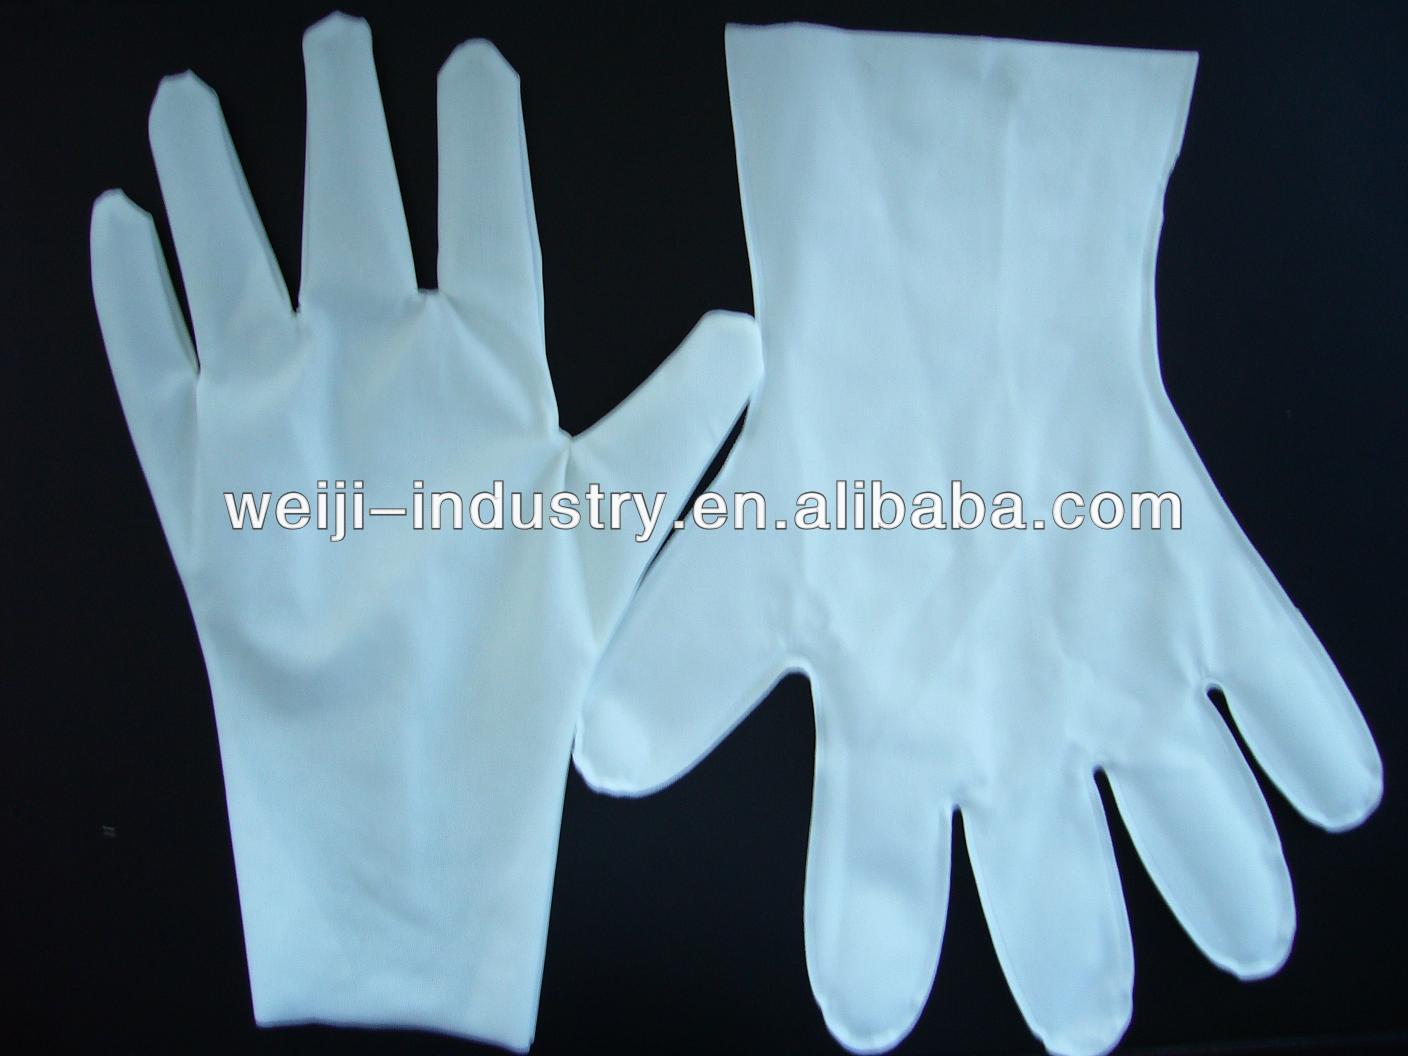 CE,FDA,ISO approved AQL1.5,2.5,4.0 latex examination gloves malay /medical,dental,surgical,laboratory,examination,food service